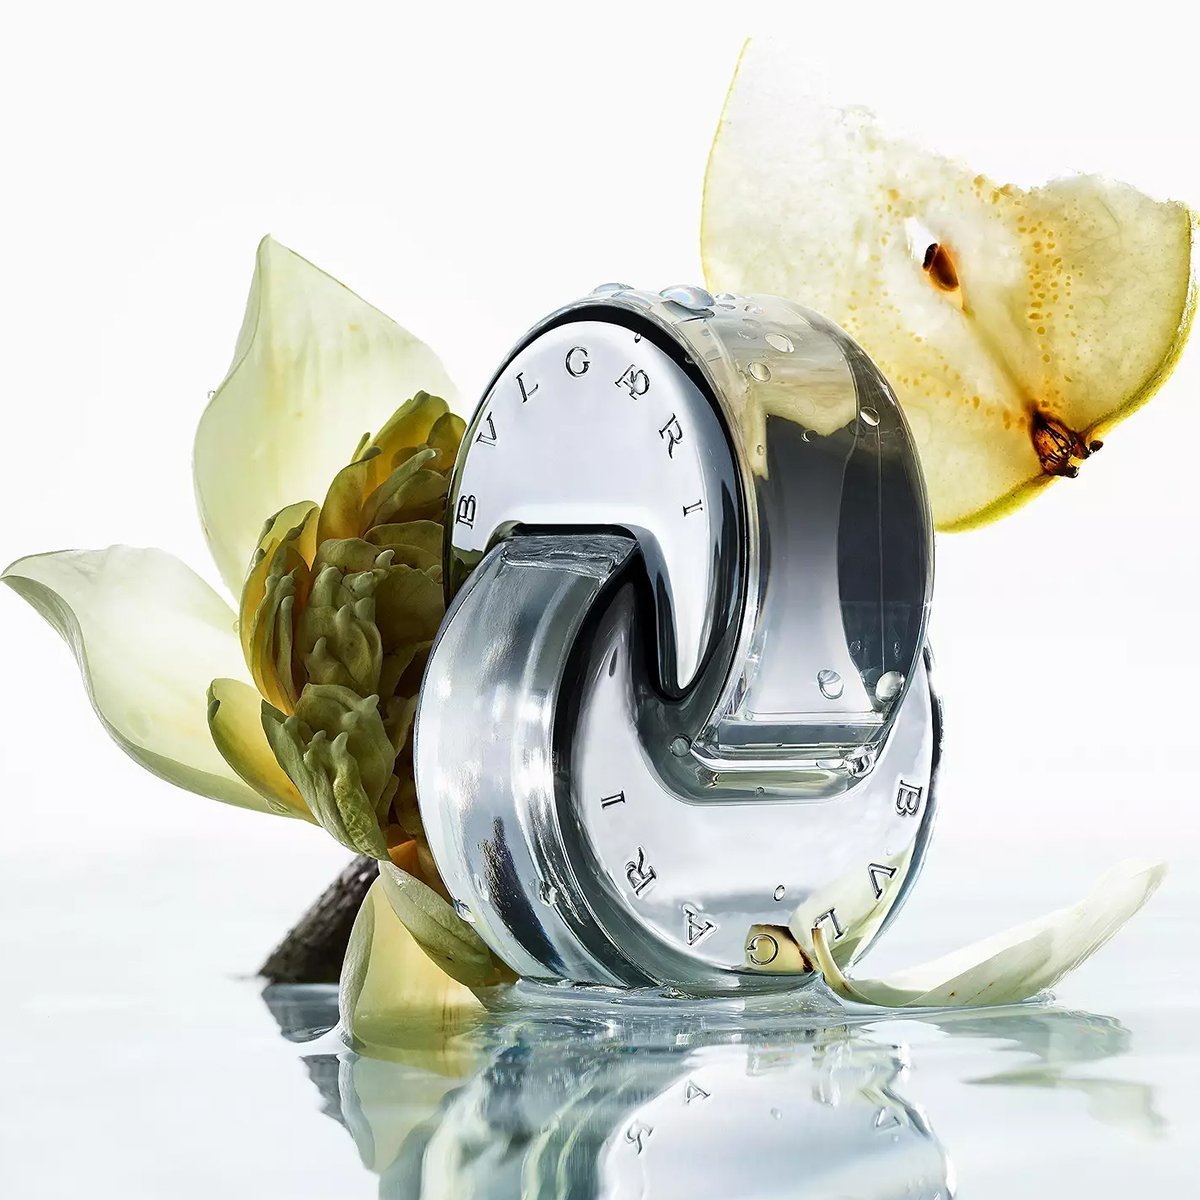 Bvlgari Omnia Crystalline EDT Body Lotion & Shower Set | My Perfume Shop Australia